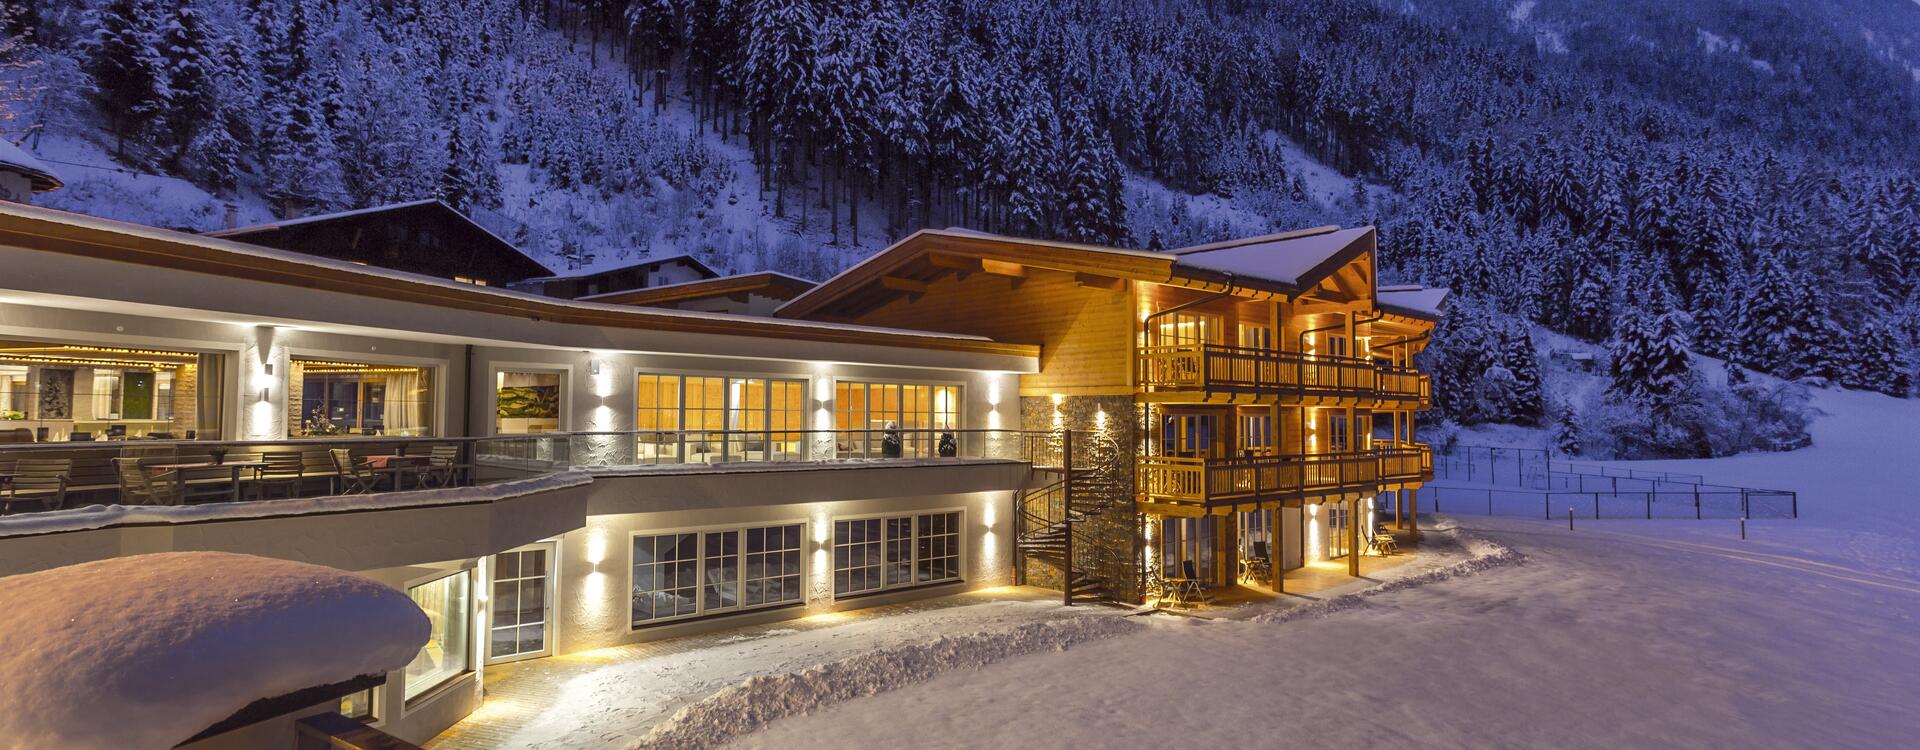 Stubai valley winter holiday Hotel